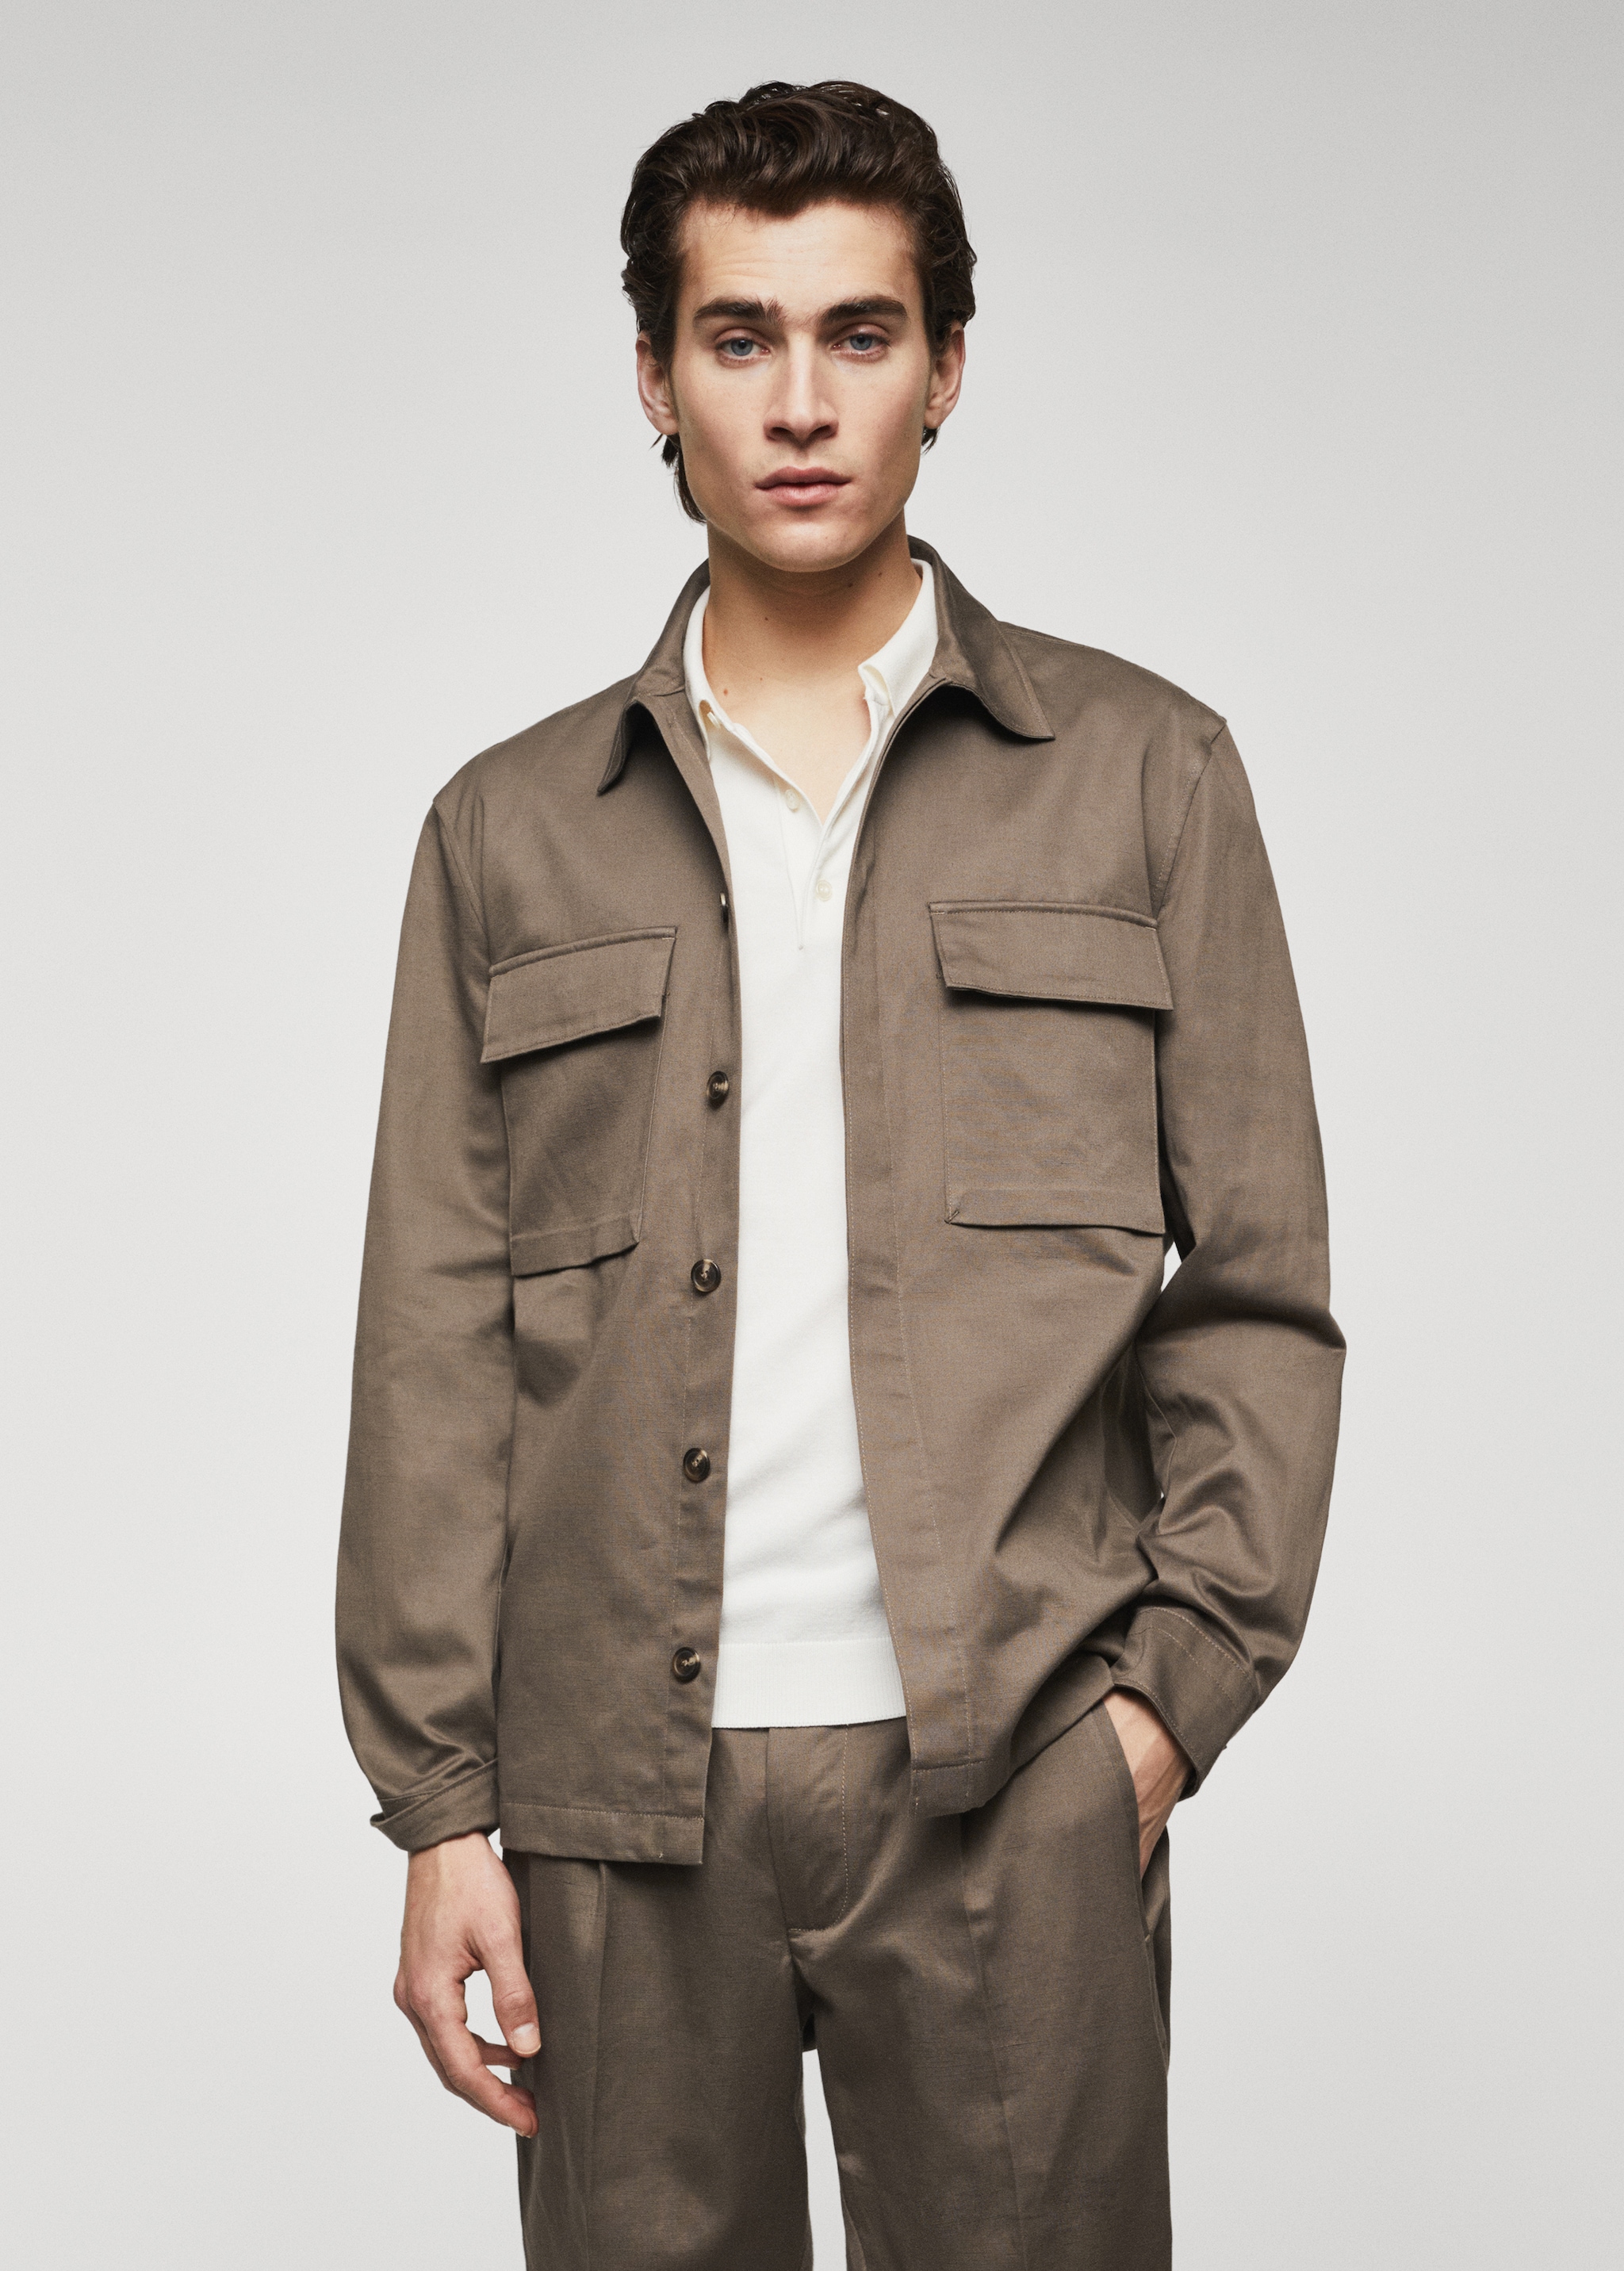 Linen cotton overshirt with pockets - Medium plane